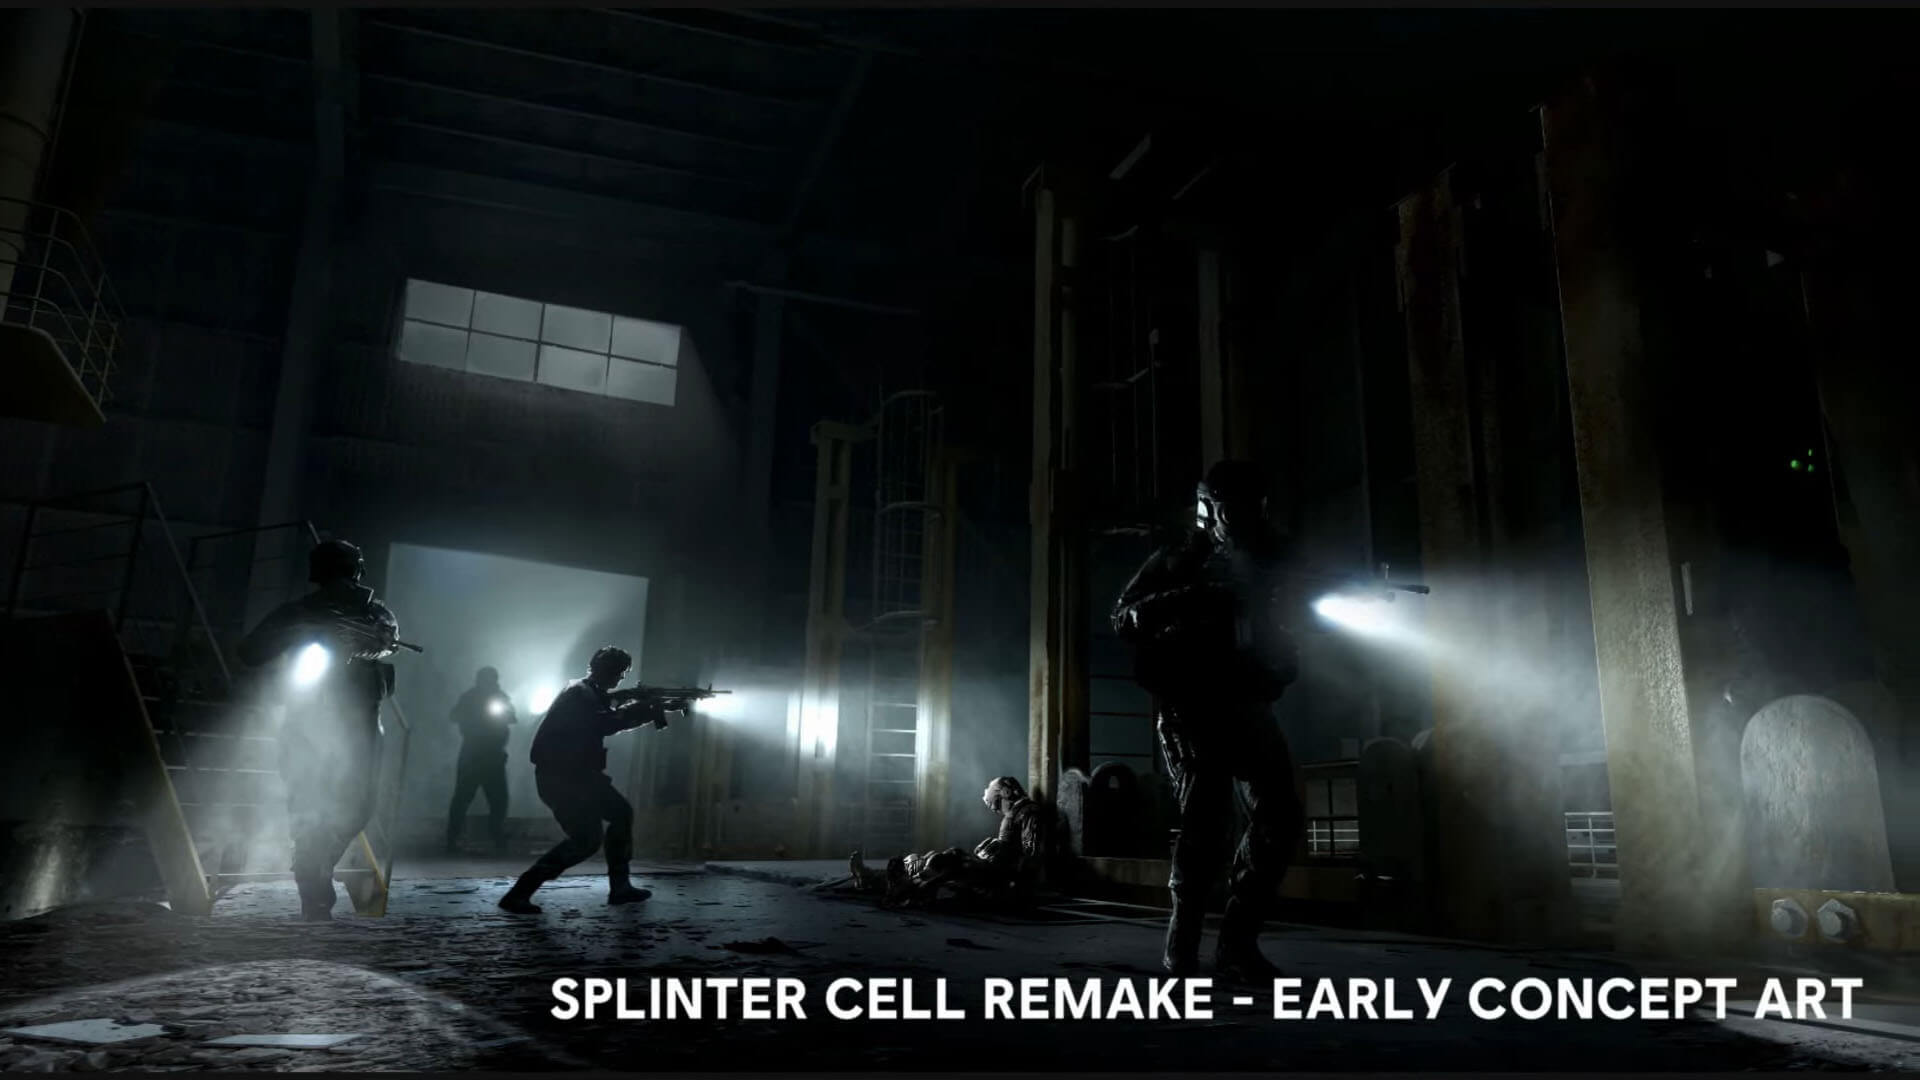 Splinter-Cell-Remake-concept-art-3.jpg